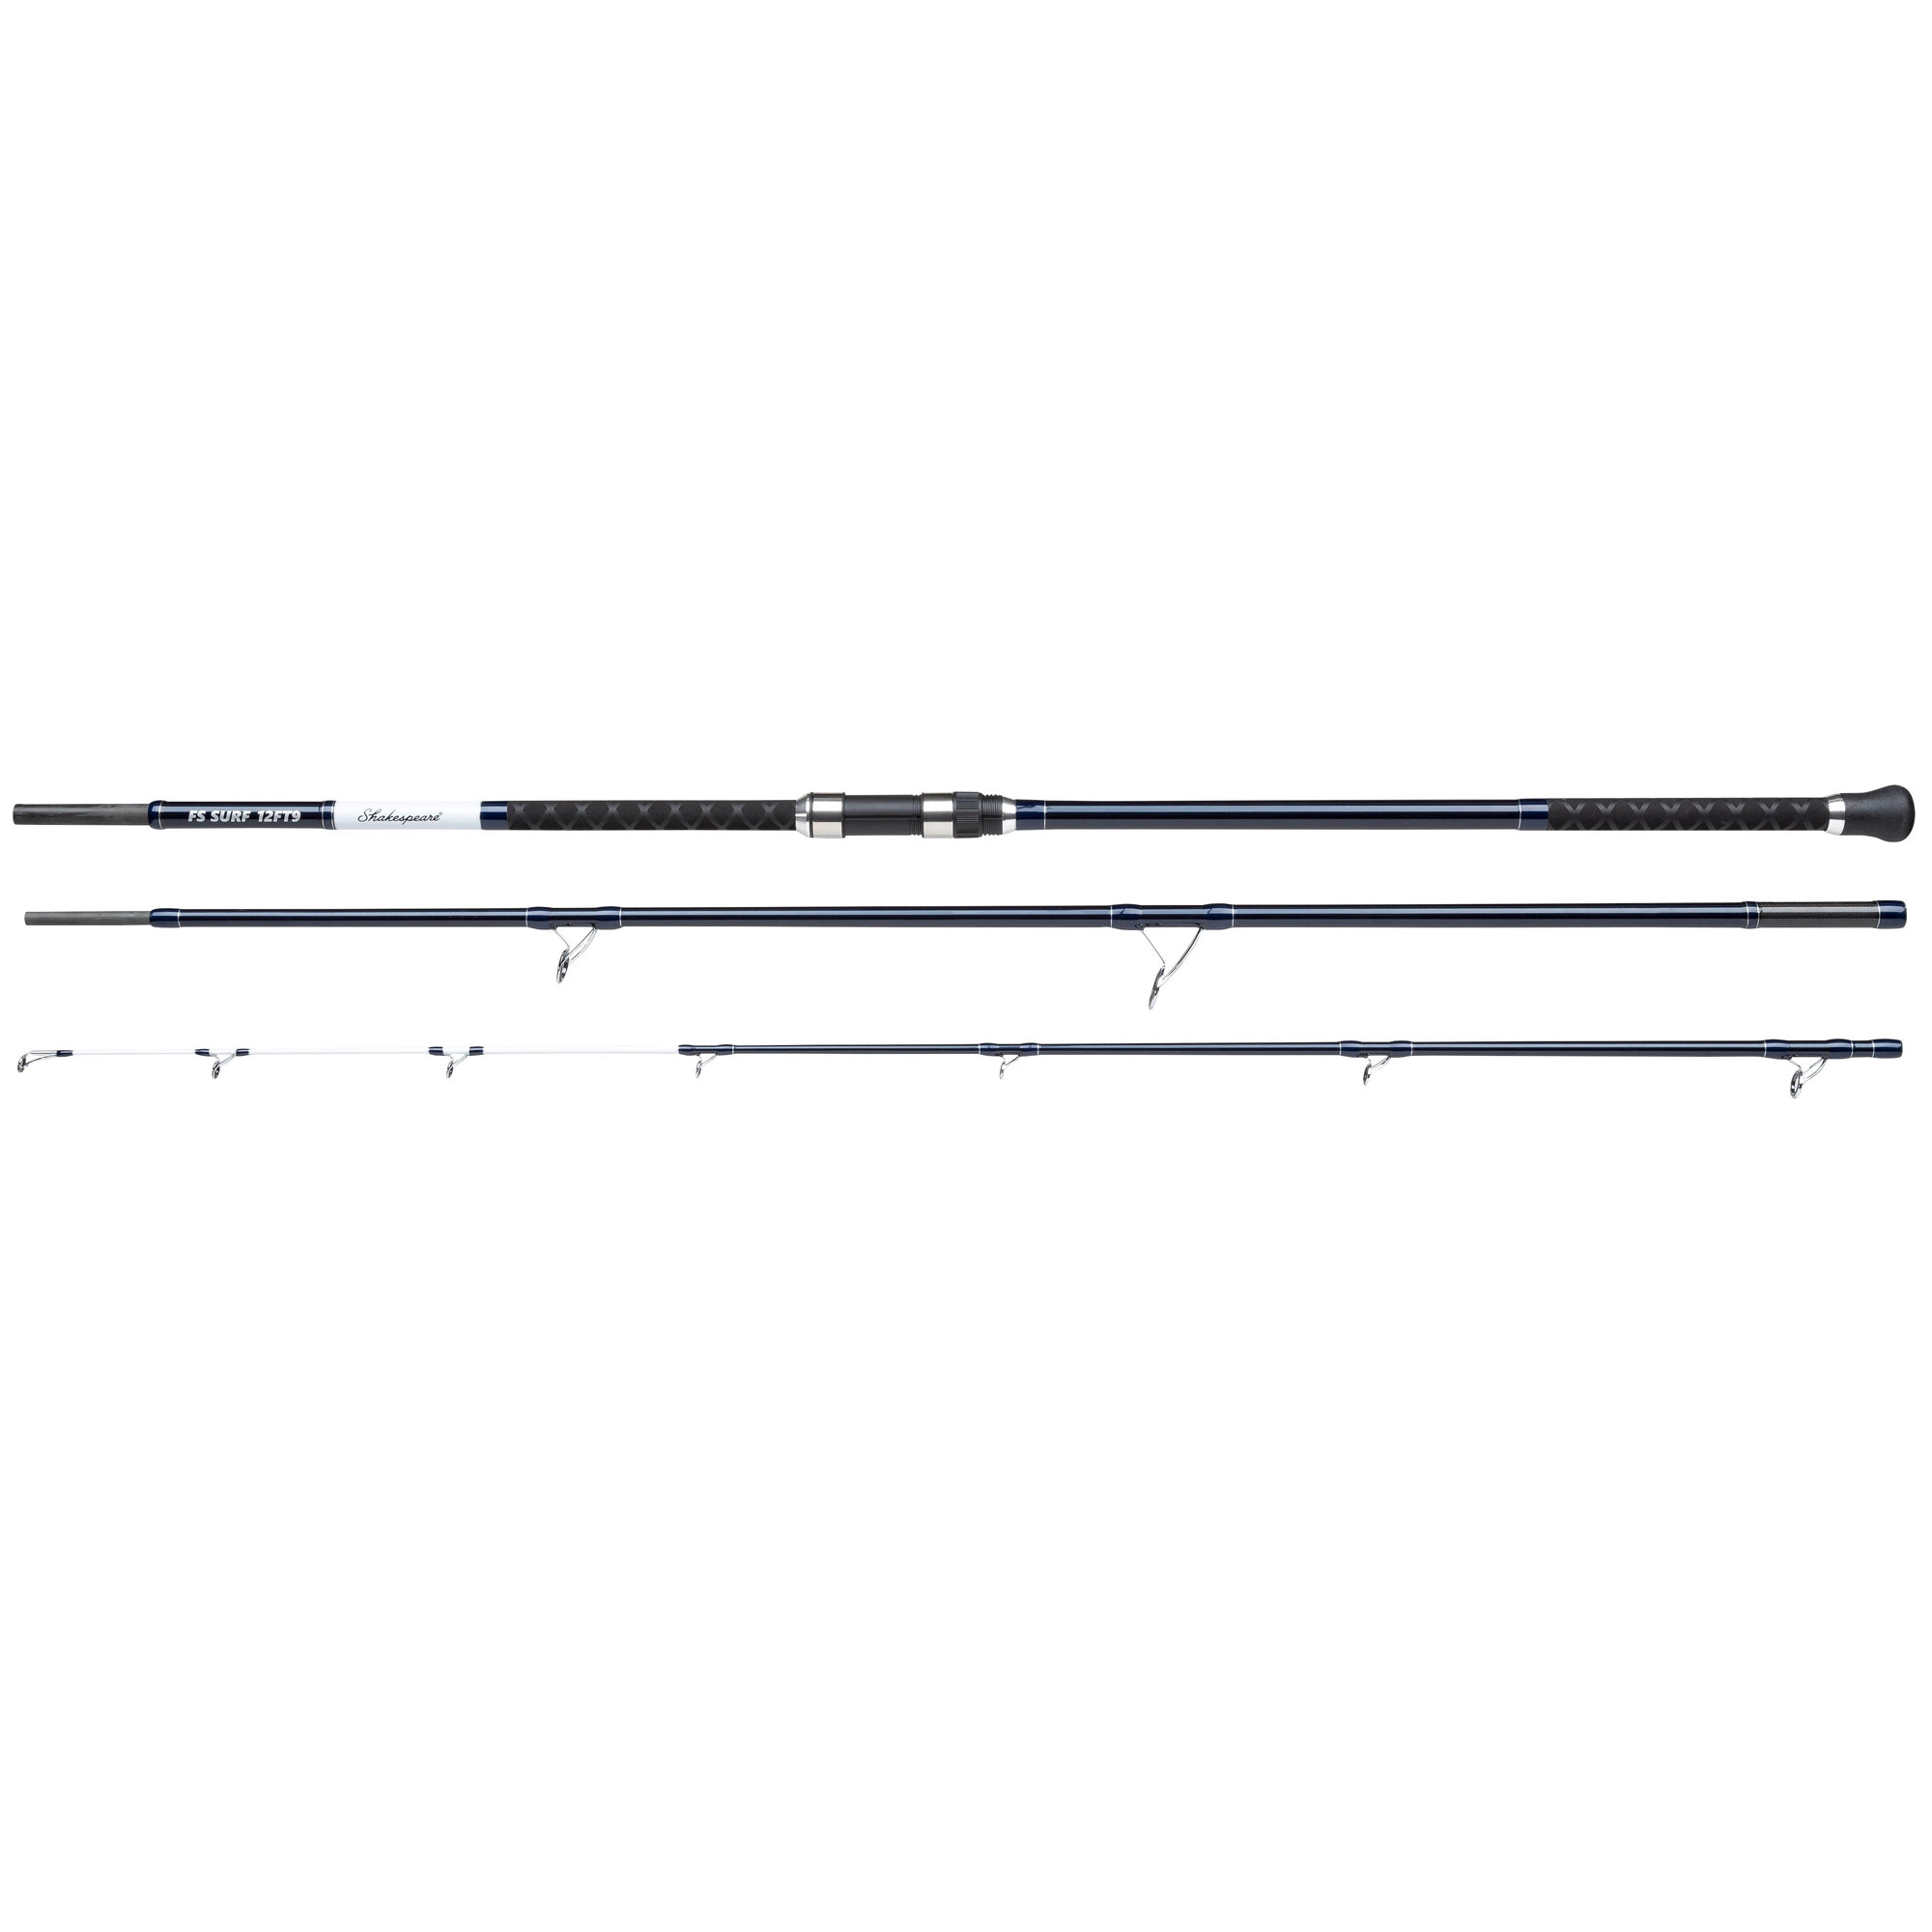 Basic Fishing Gear List - Scuba.com  Telescopic fishing rod, Fishing rods  and reels, Fishing reels